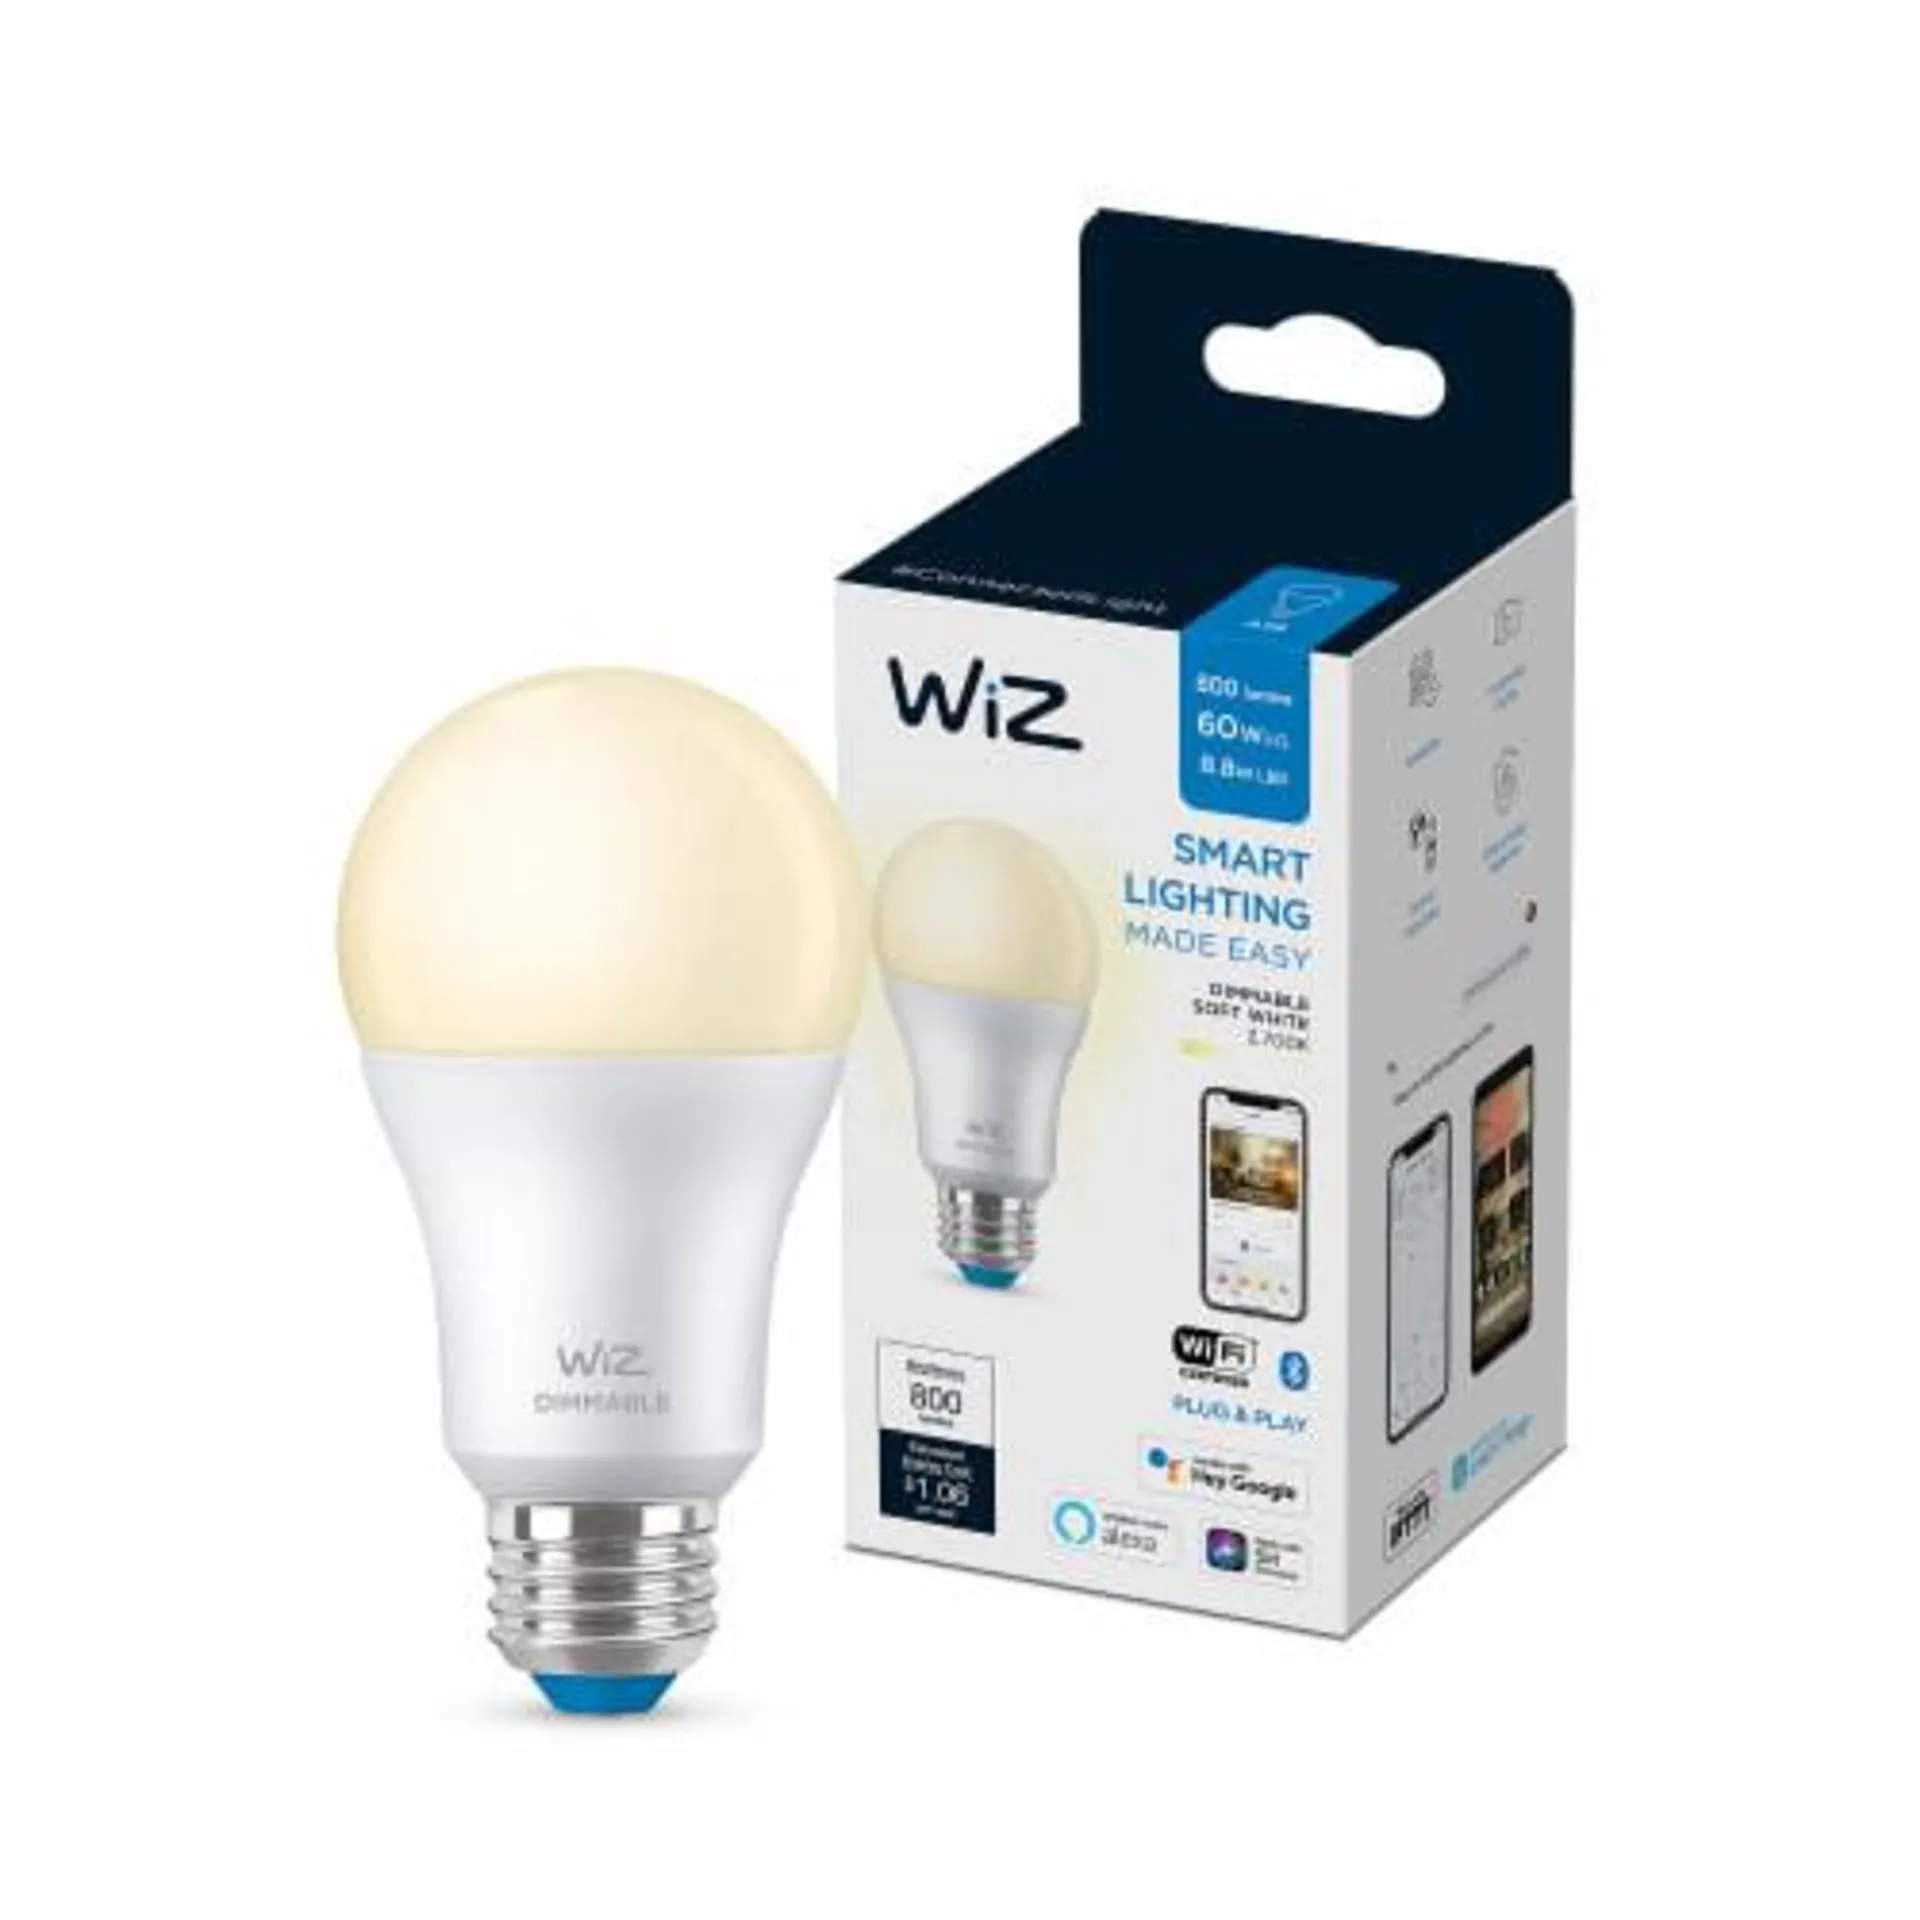 Philips WiZ (60-Watt) Smart Light Bulb